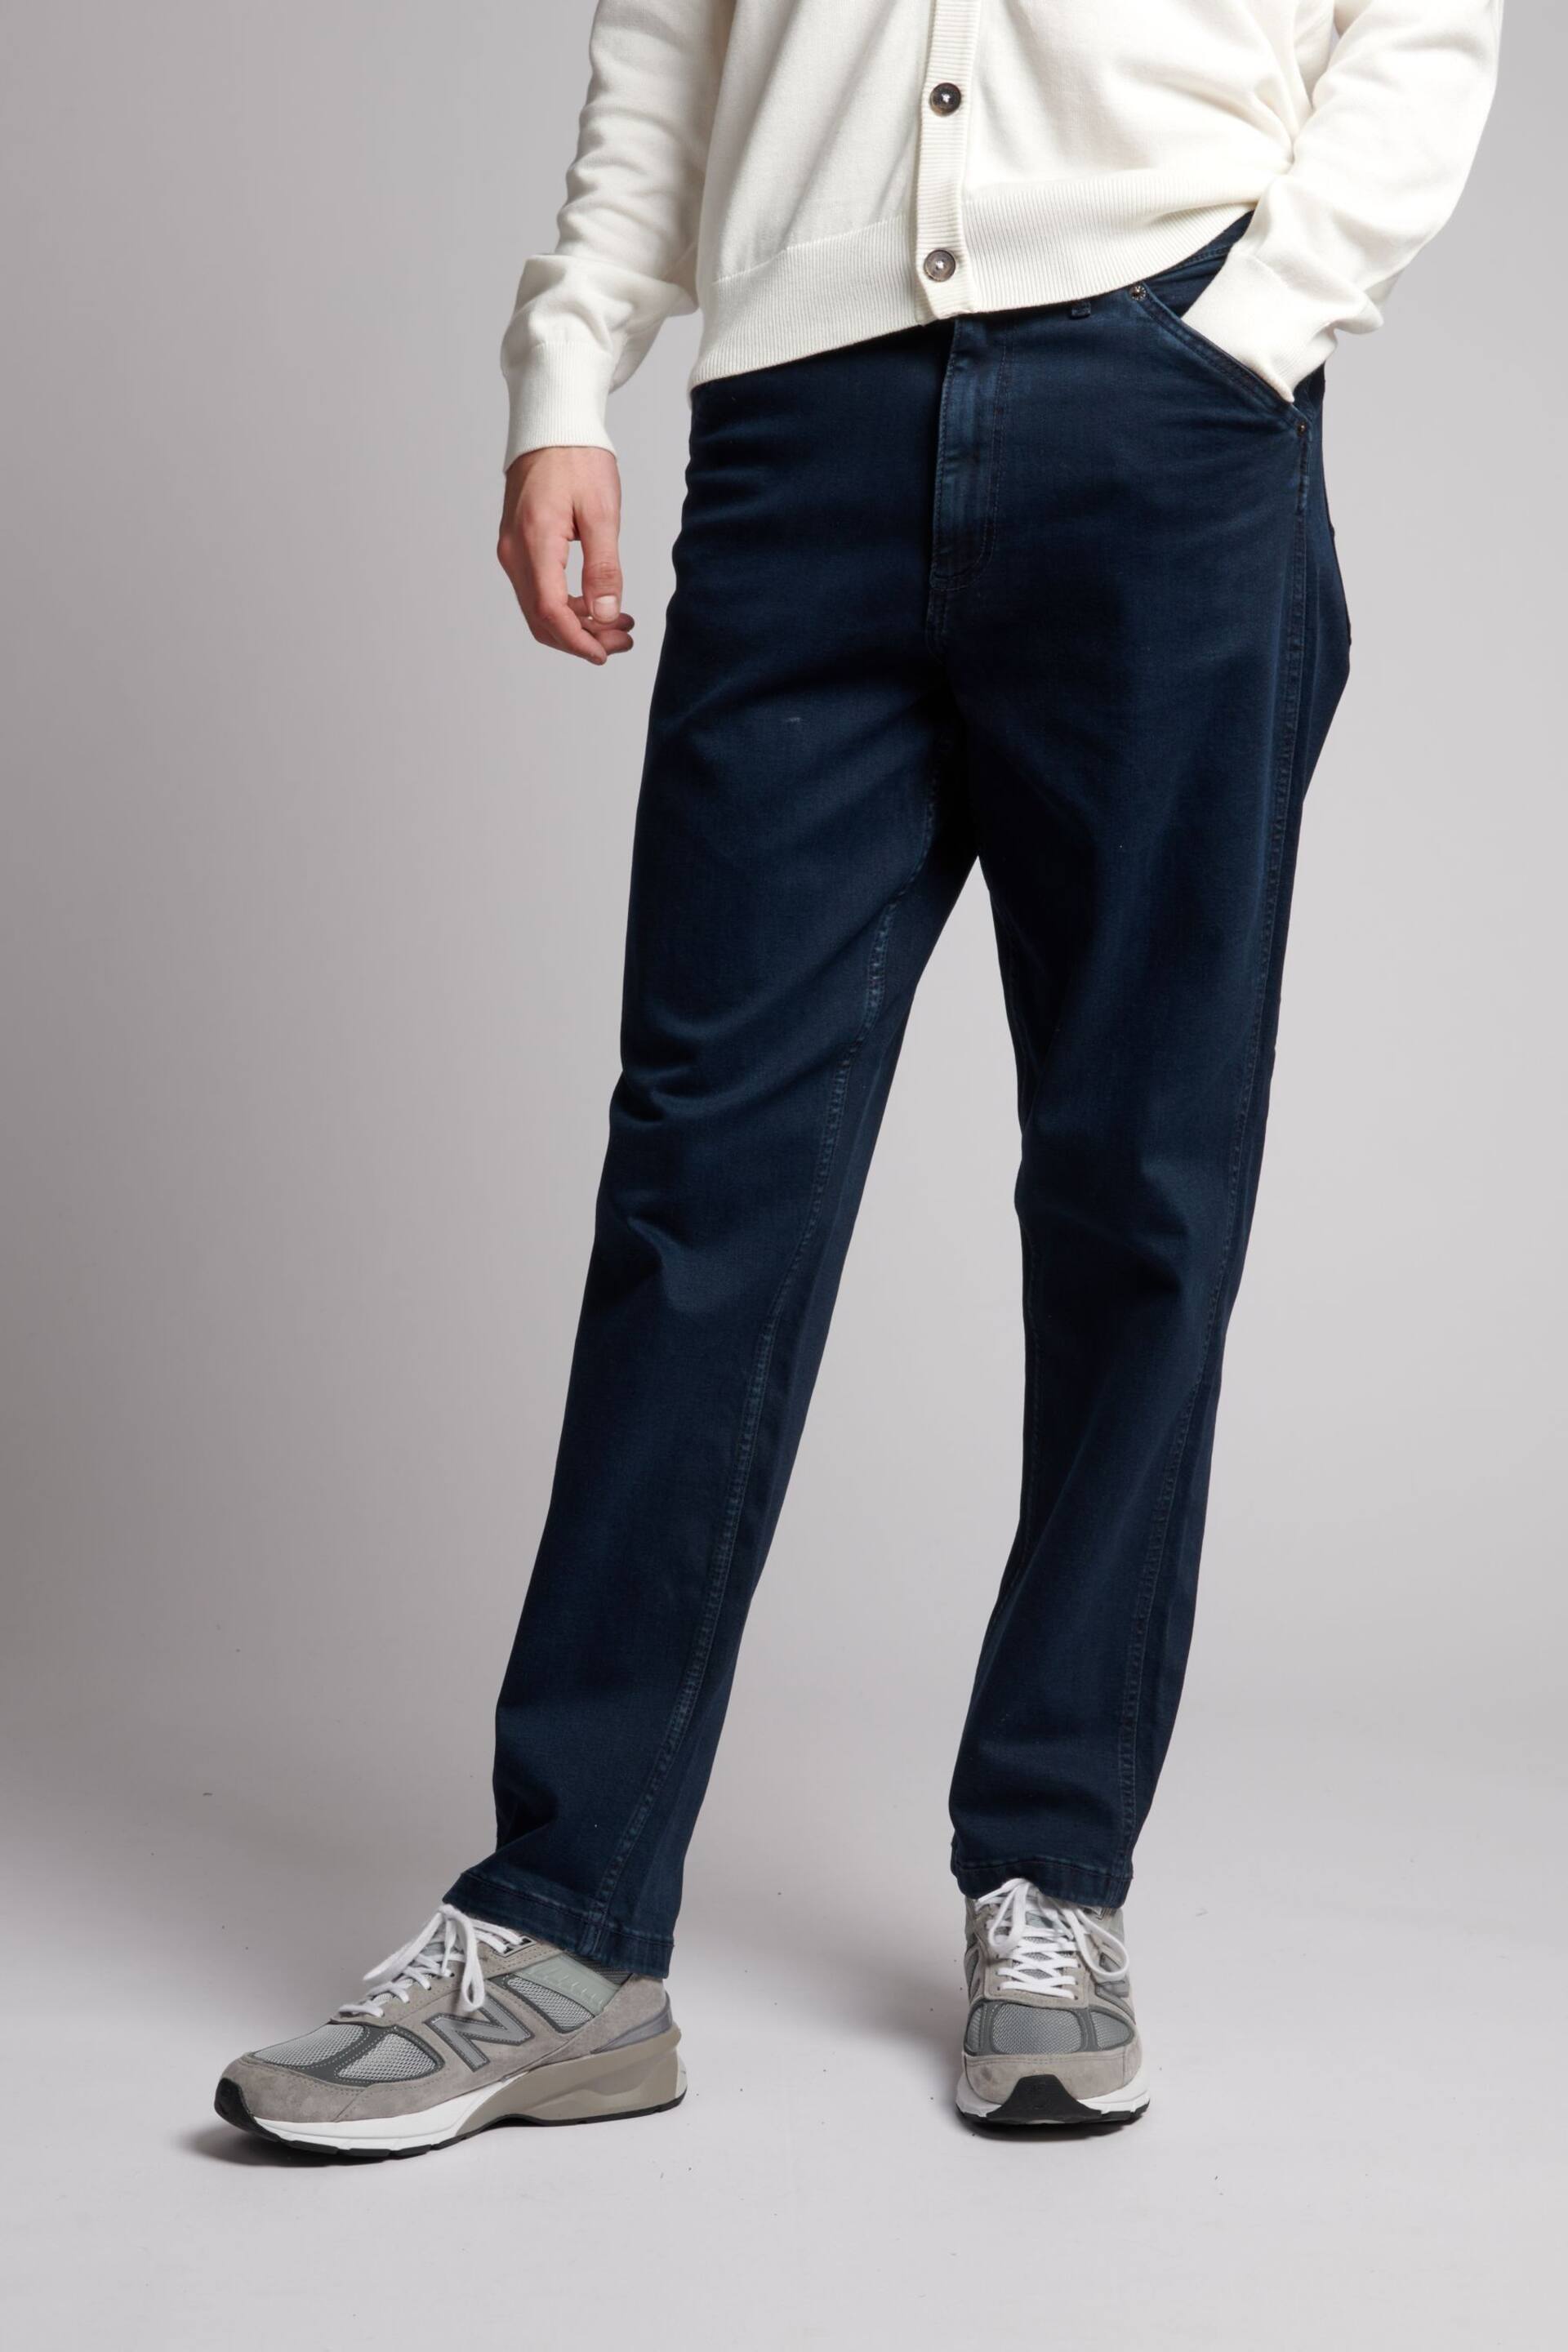 U.S. Polo Assn. Mens Blue Five Pocket Denim Loose Jeans - Image 1 of 4